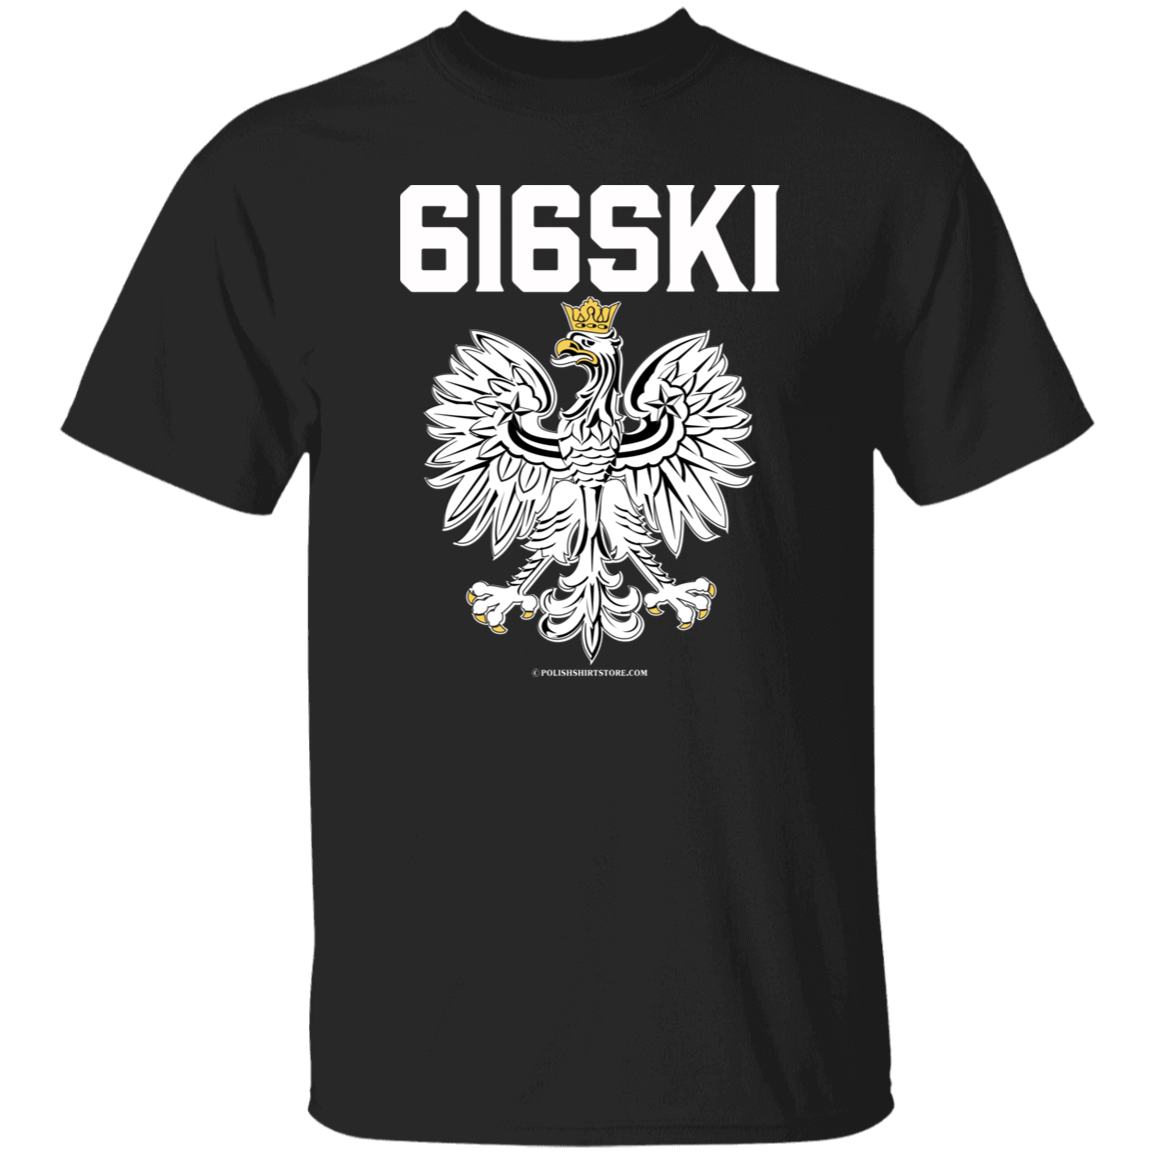 616SKI Apparel CustomCat G500 5.3 oz. T-Shirt Black S